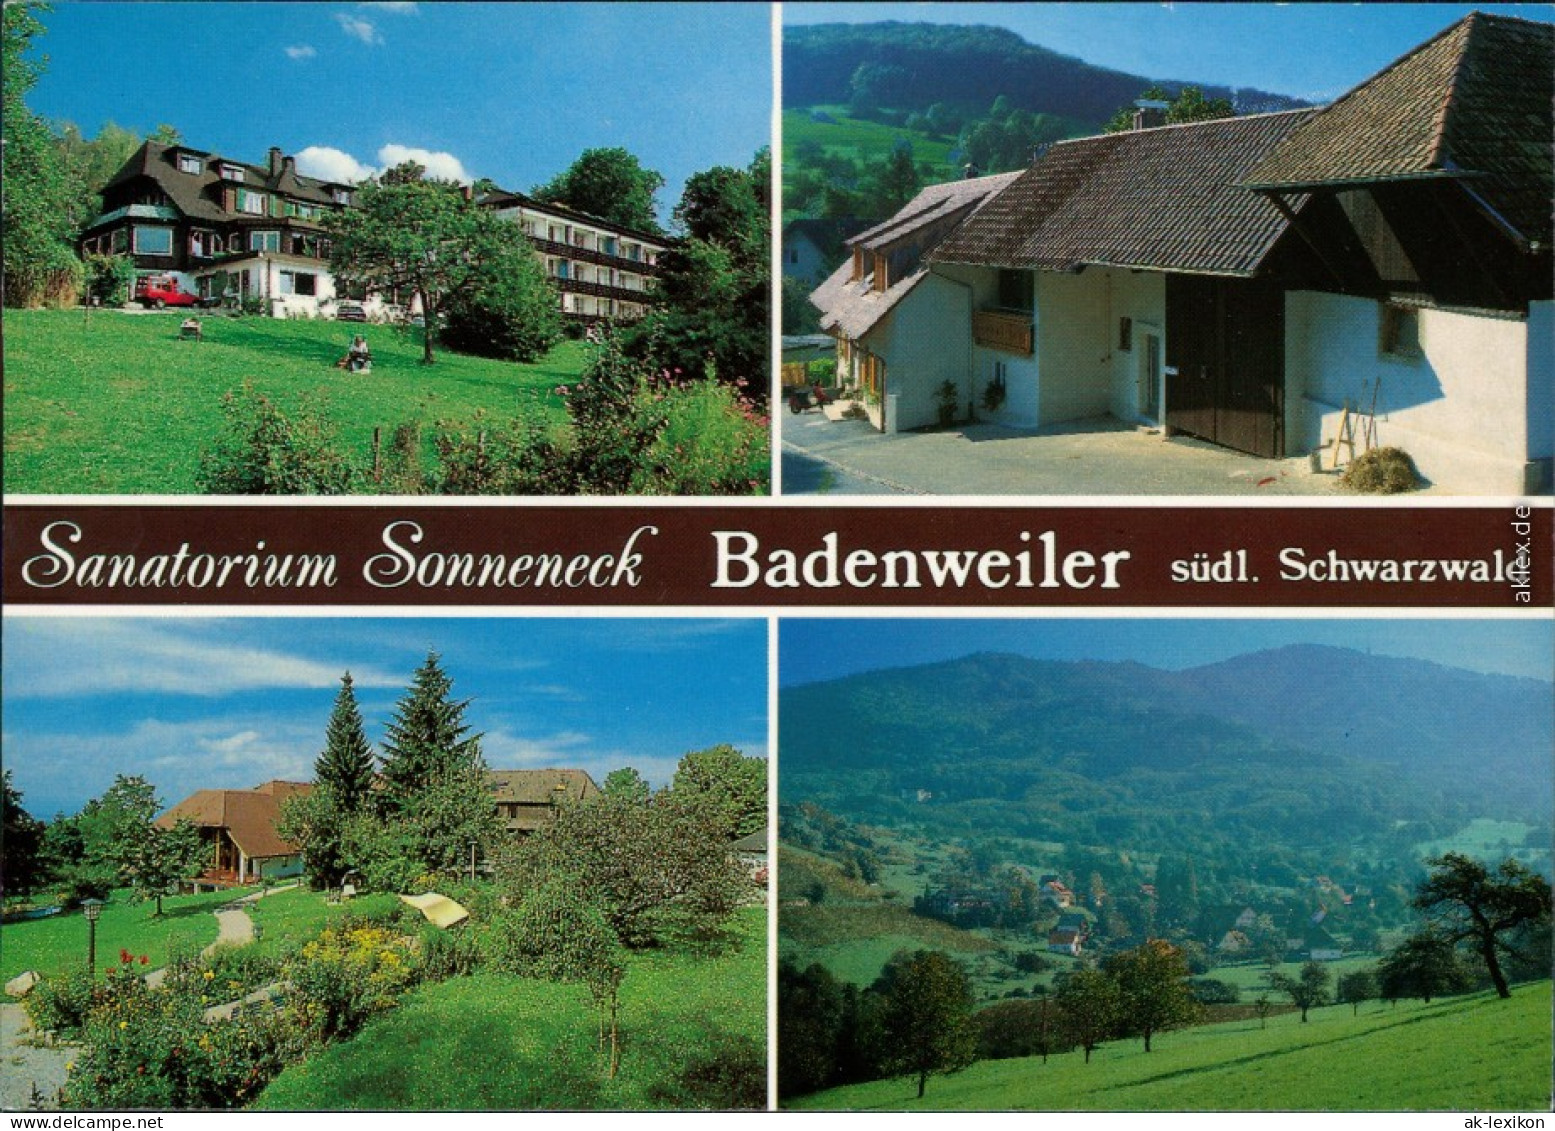 Badenweiler Reha-Klinik Sanatorium Sonneneck Mit Panorama-Blick 1996 - Badenweiler